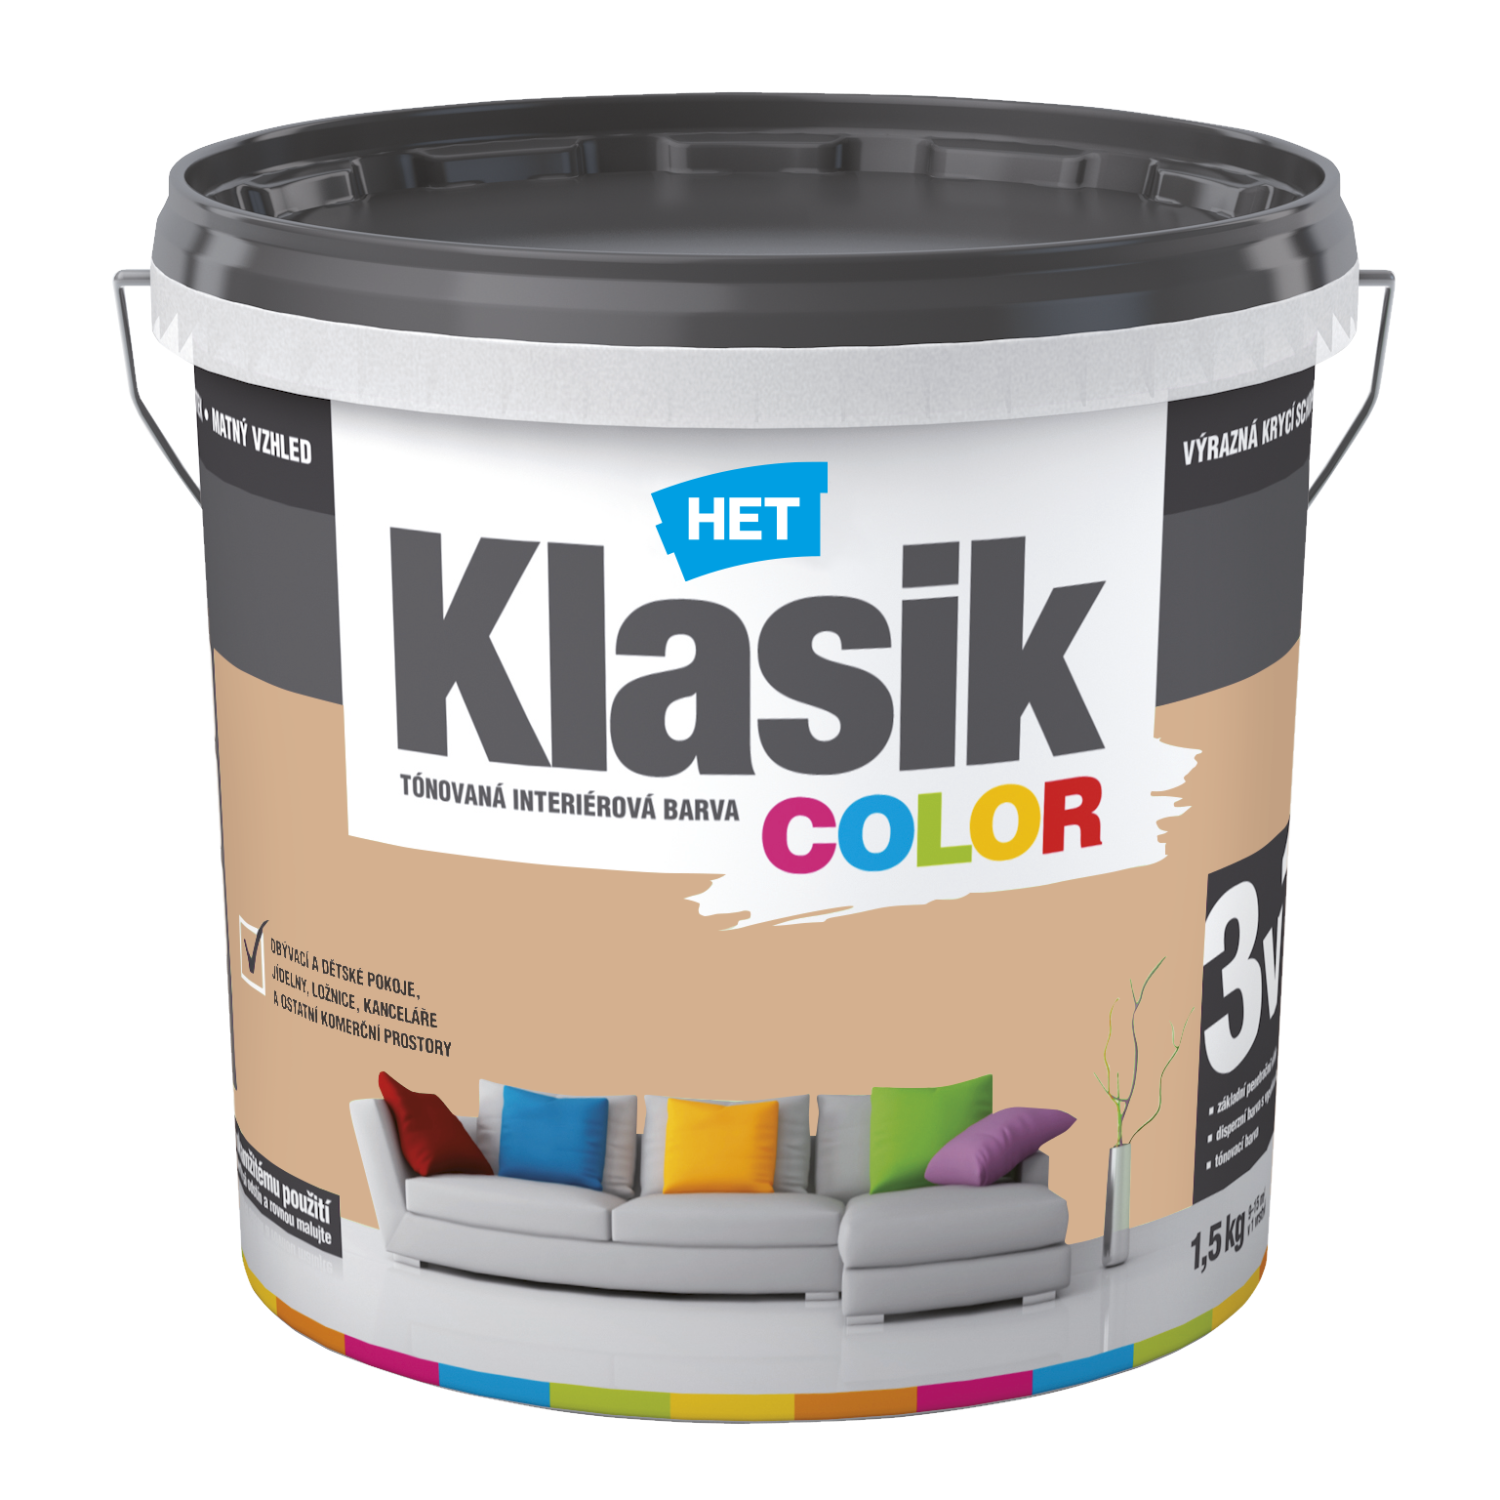 HET Klasik COLOR tónovaná interiérová akrylátová disperzná oteruvzdorná farba 1,5 kg, KC0257 - hnedý orechový